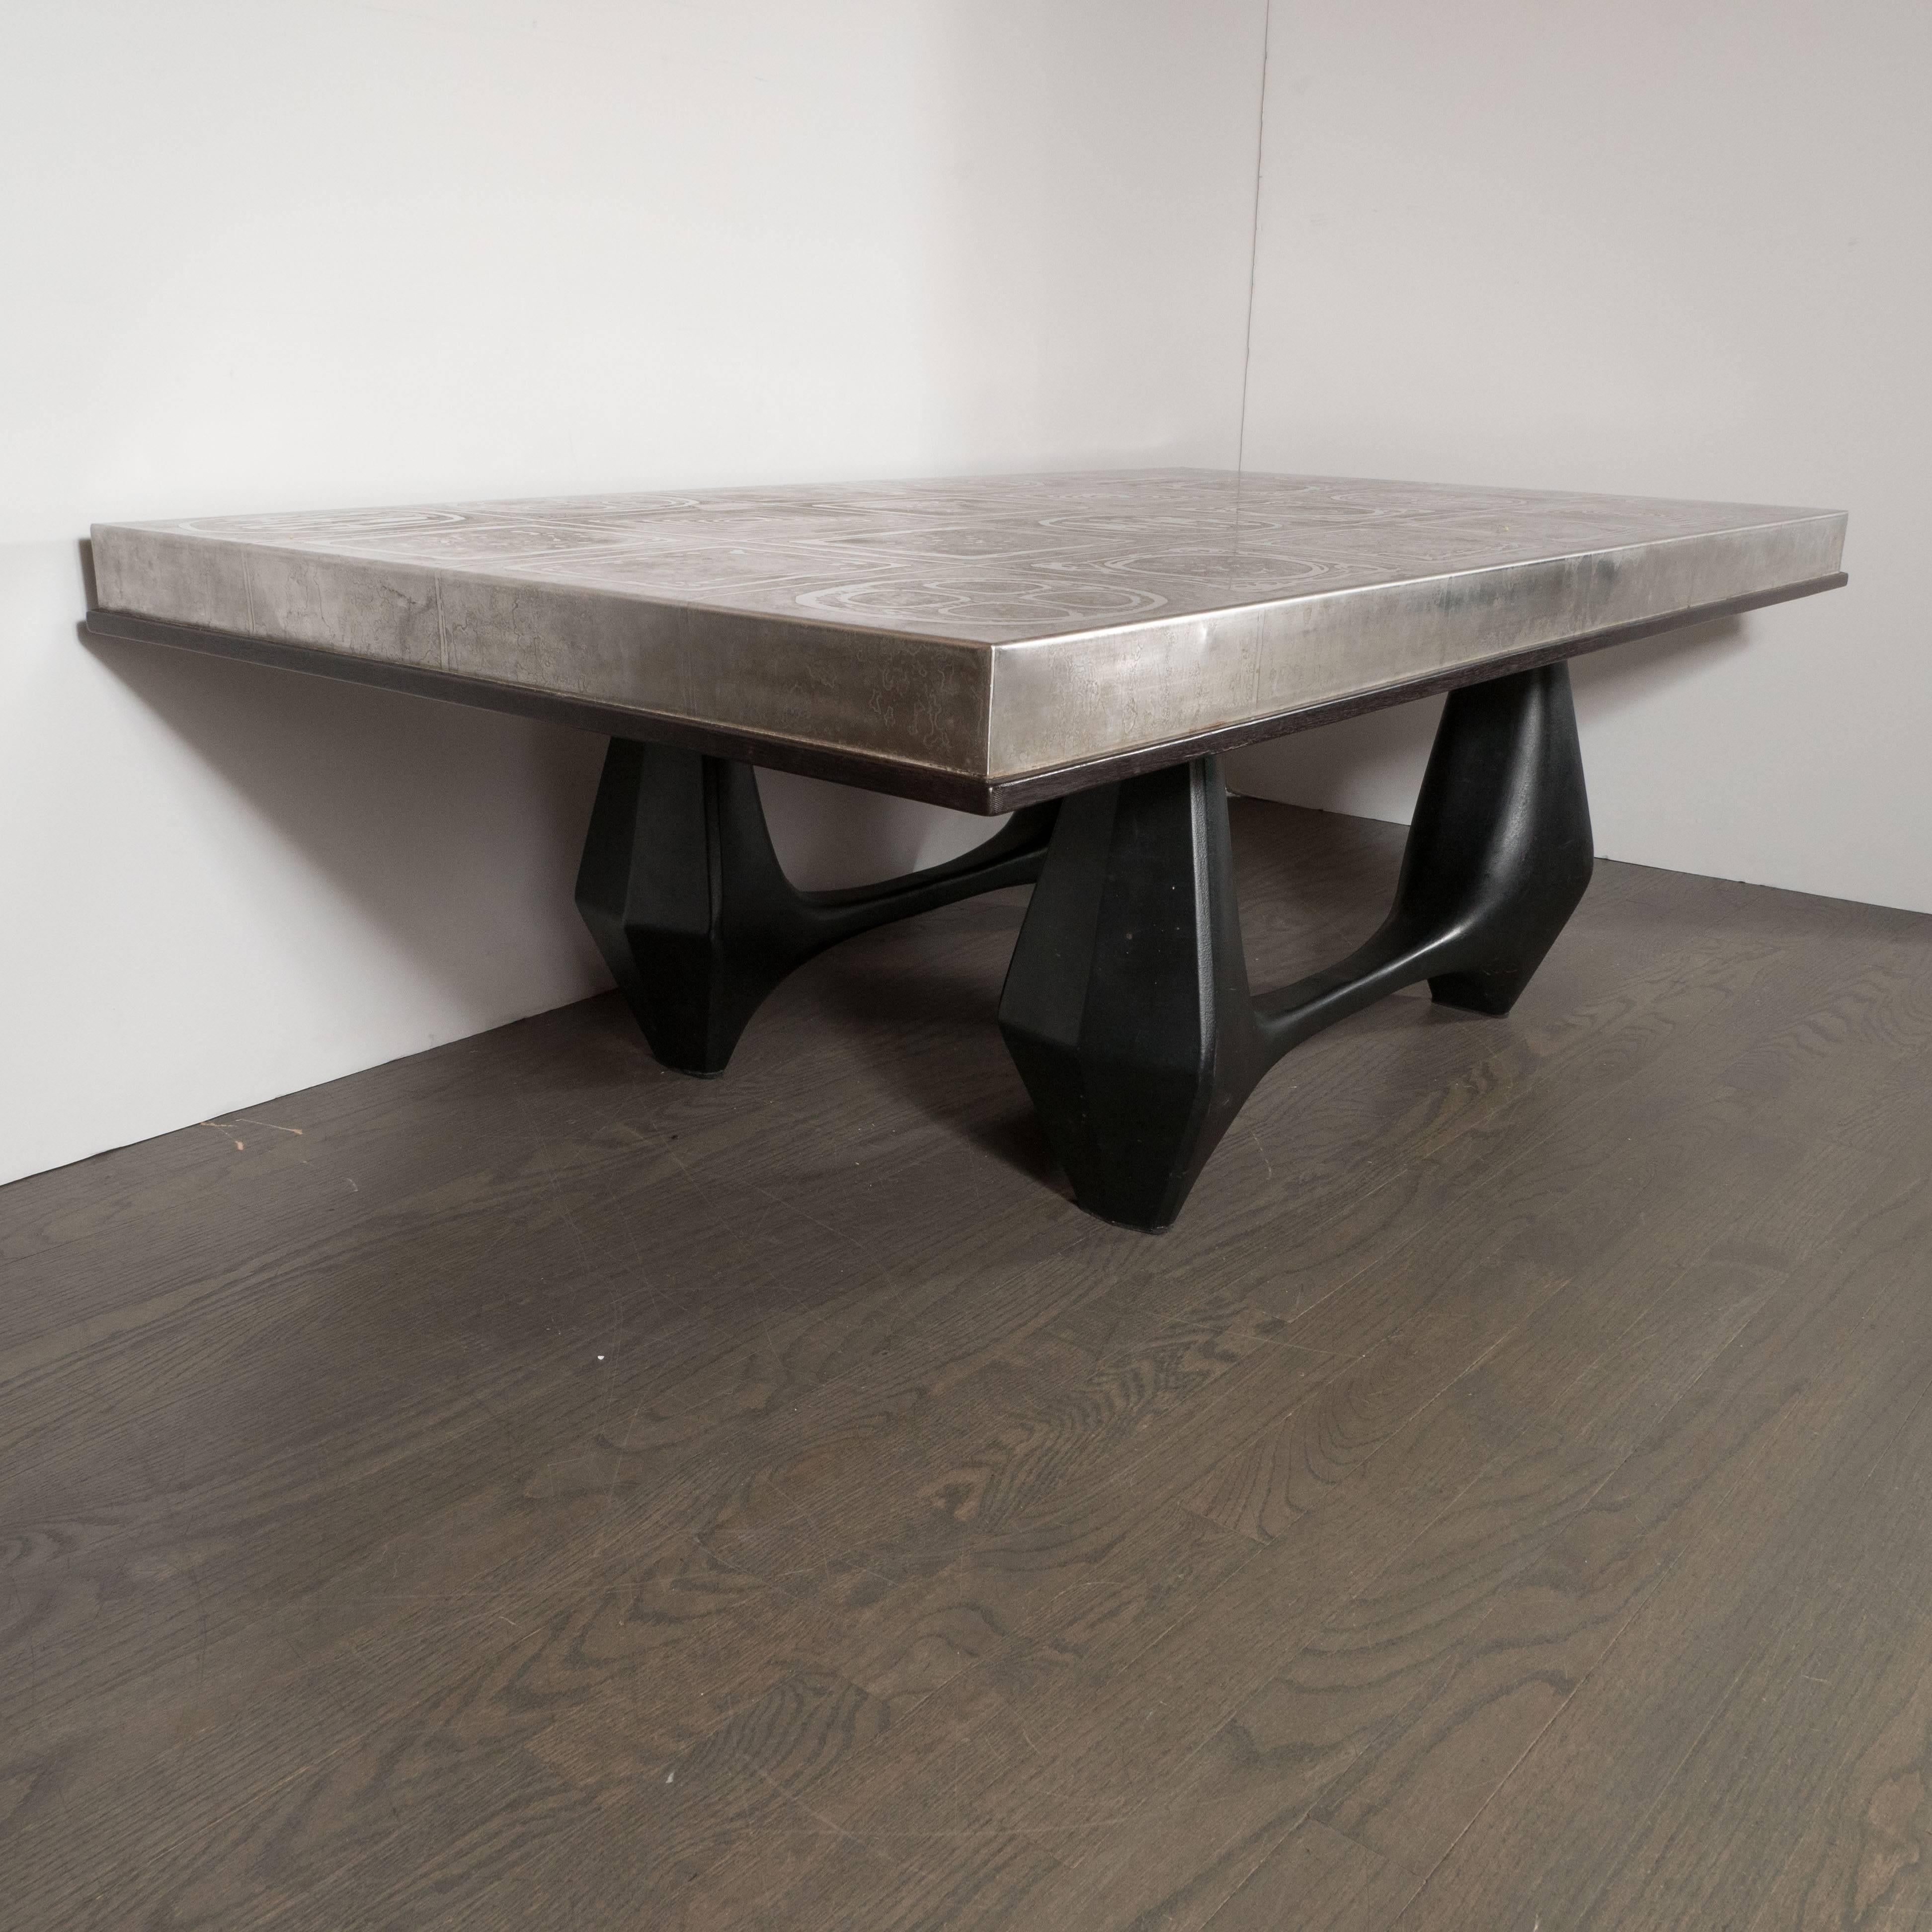 Danish Mid-Century Modernist Acid Etched Aluminum Table with Sculptural Black Base